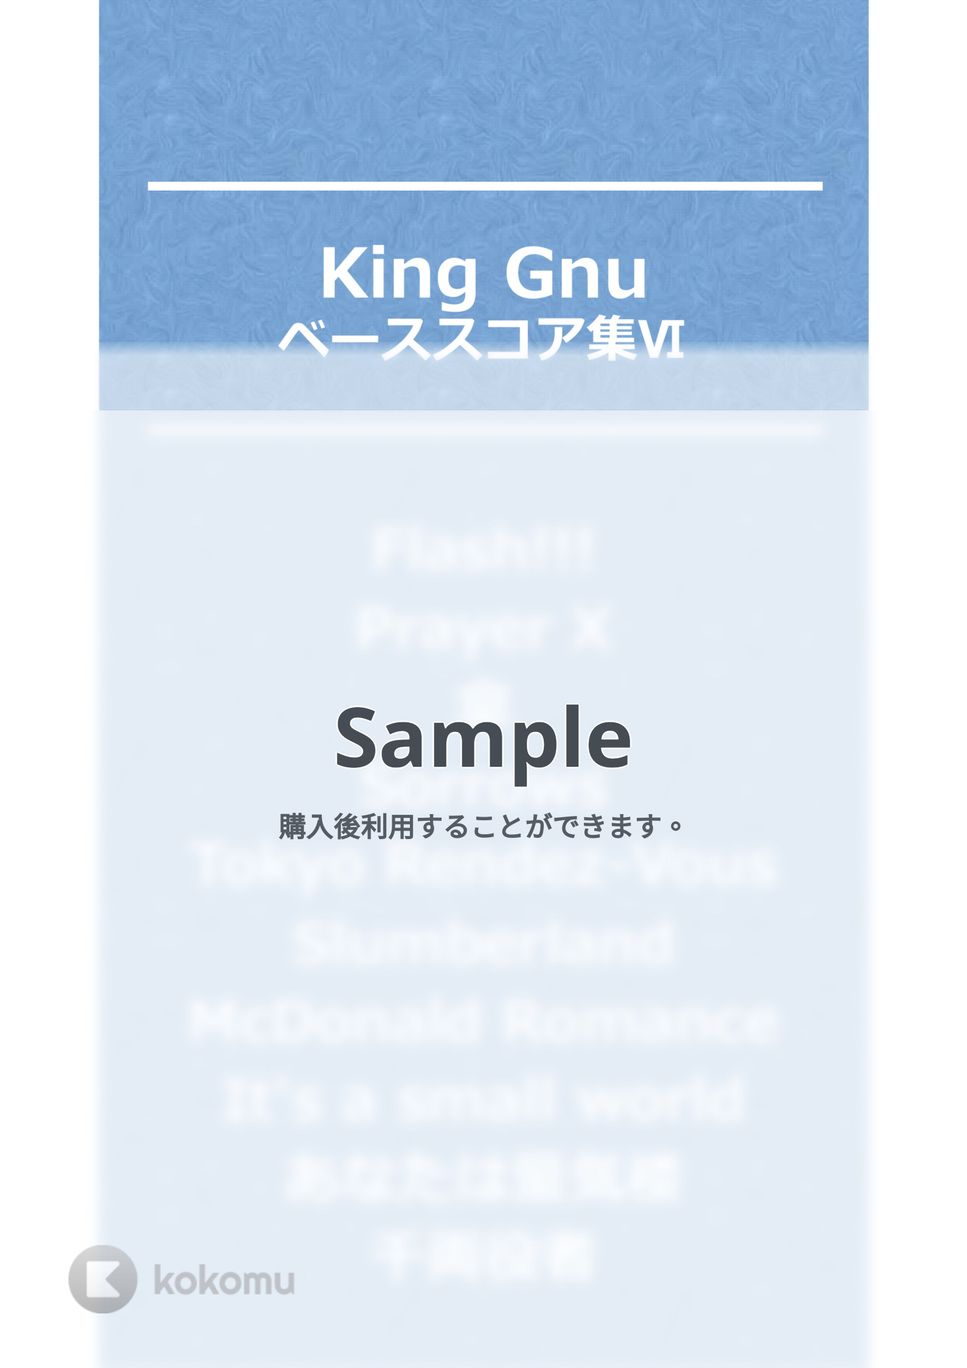 King Gnu - King Gnu ベースTAB譜面 10曲セット集Ⅱ by たぶべー